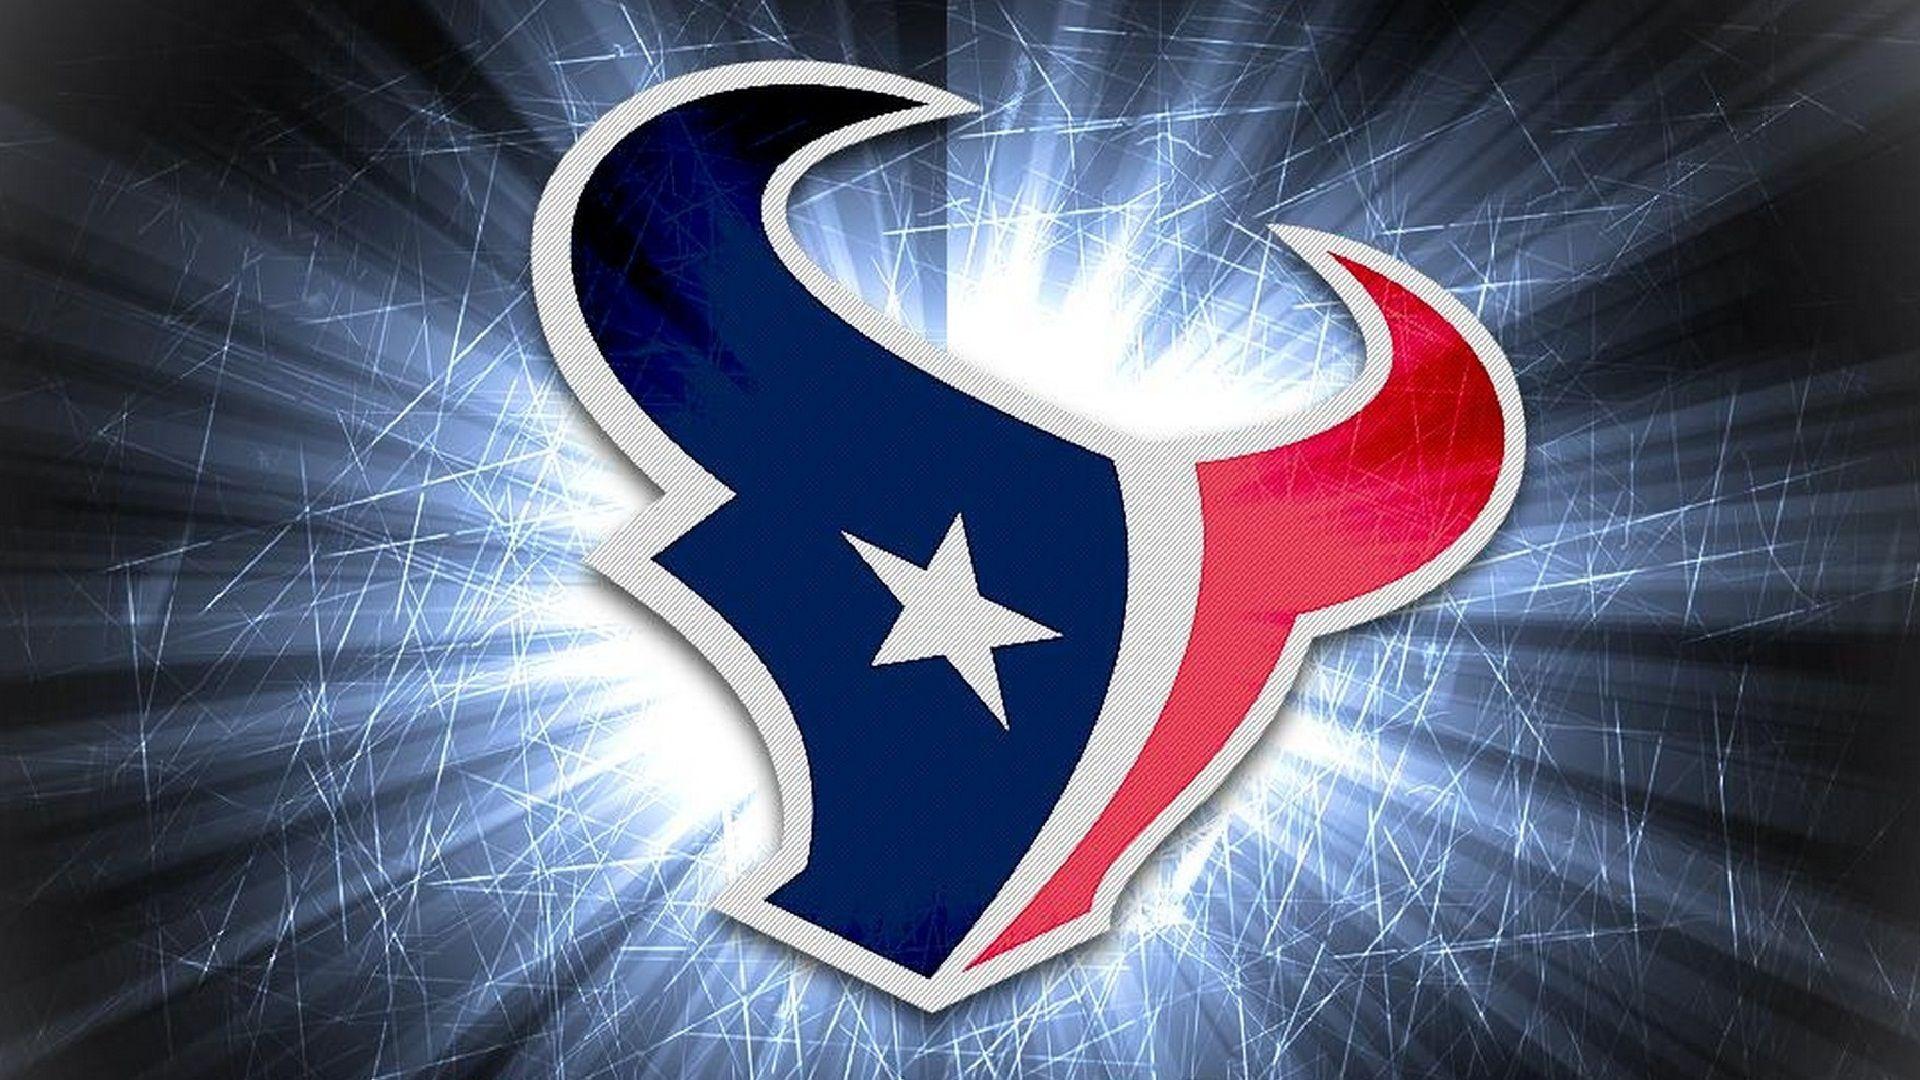 Houston Texans HD Wallpaper. Houston texans, Football wallpaper